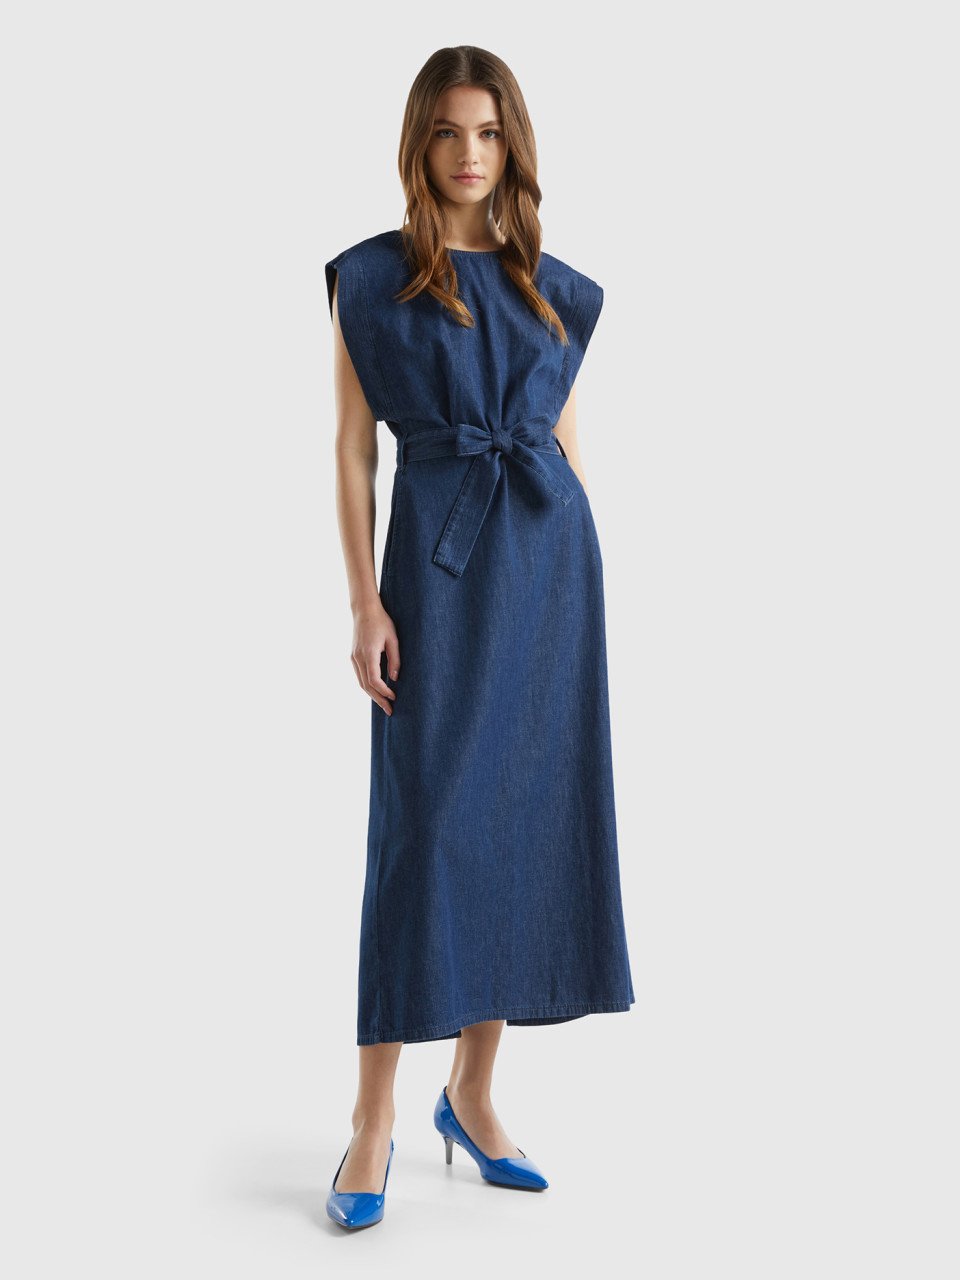 Benetton, Denim Kimono Dress, Dark Blue, Women